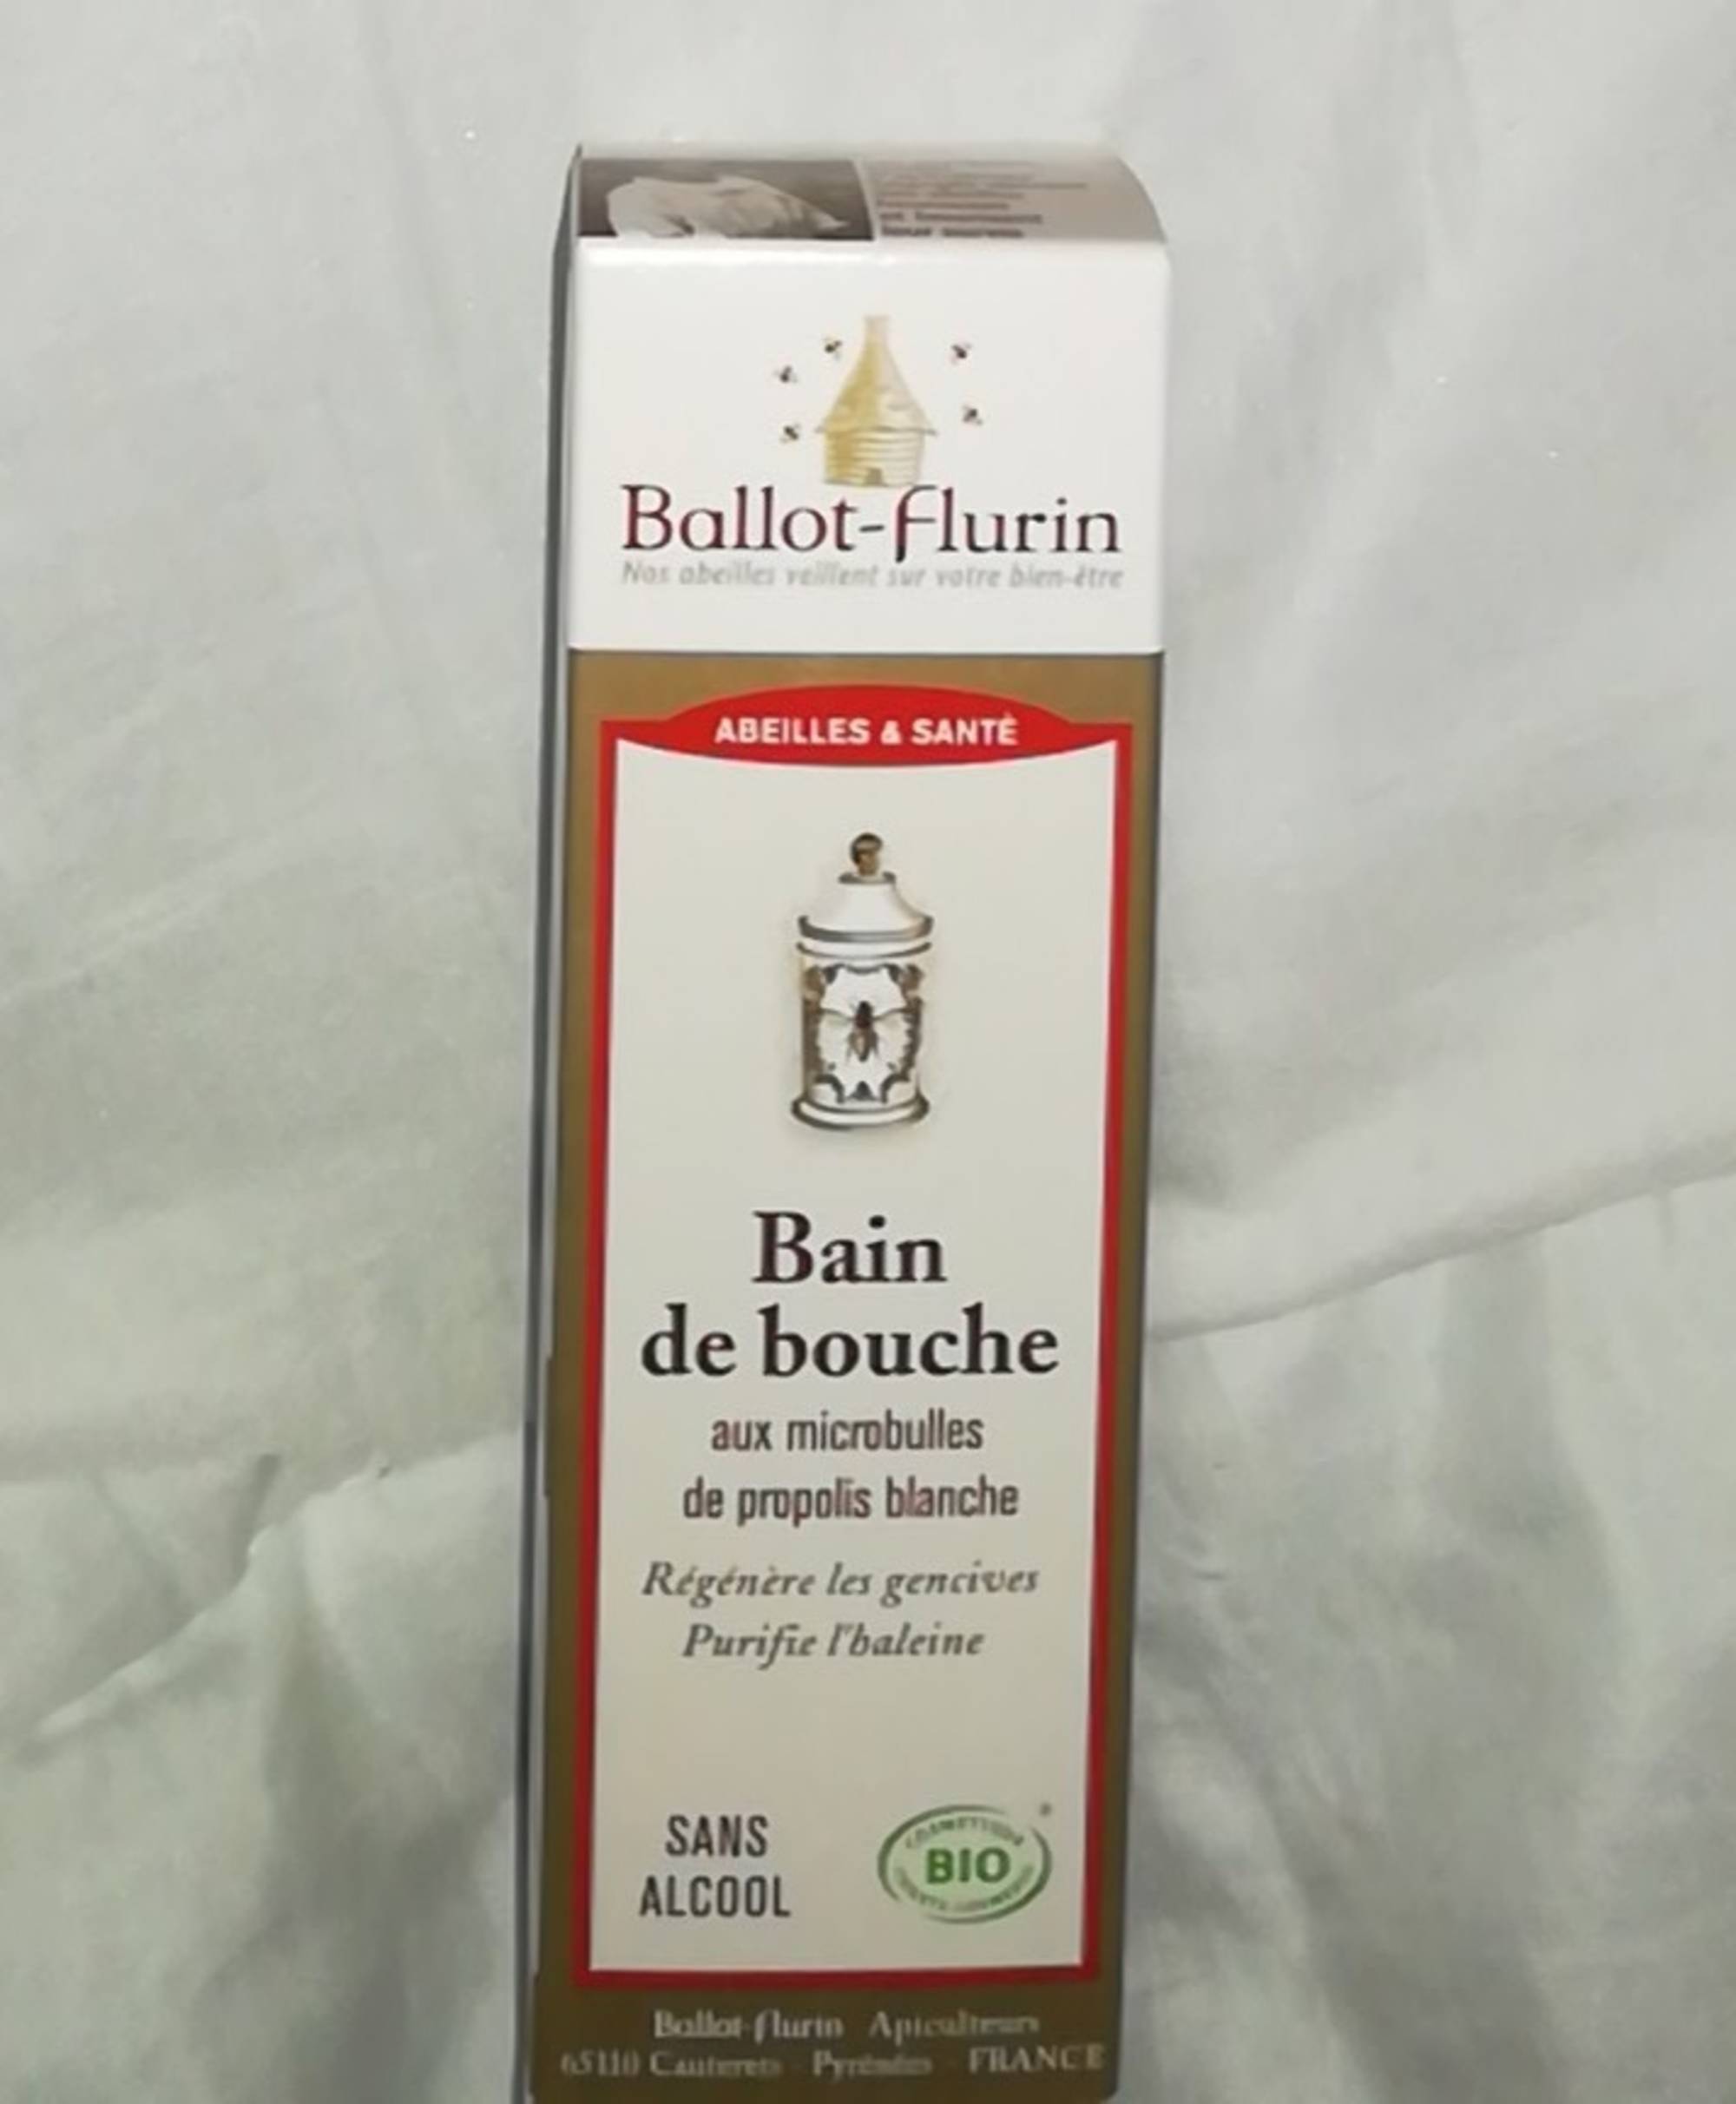 BALLOT-FLURIN - Abeilles & Santé - Bain de bouche